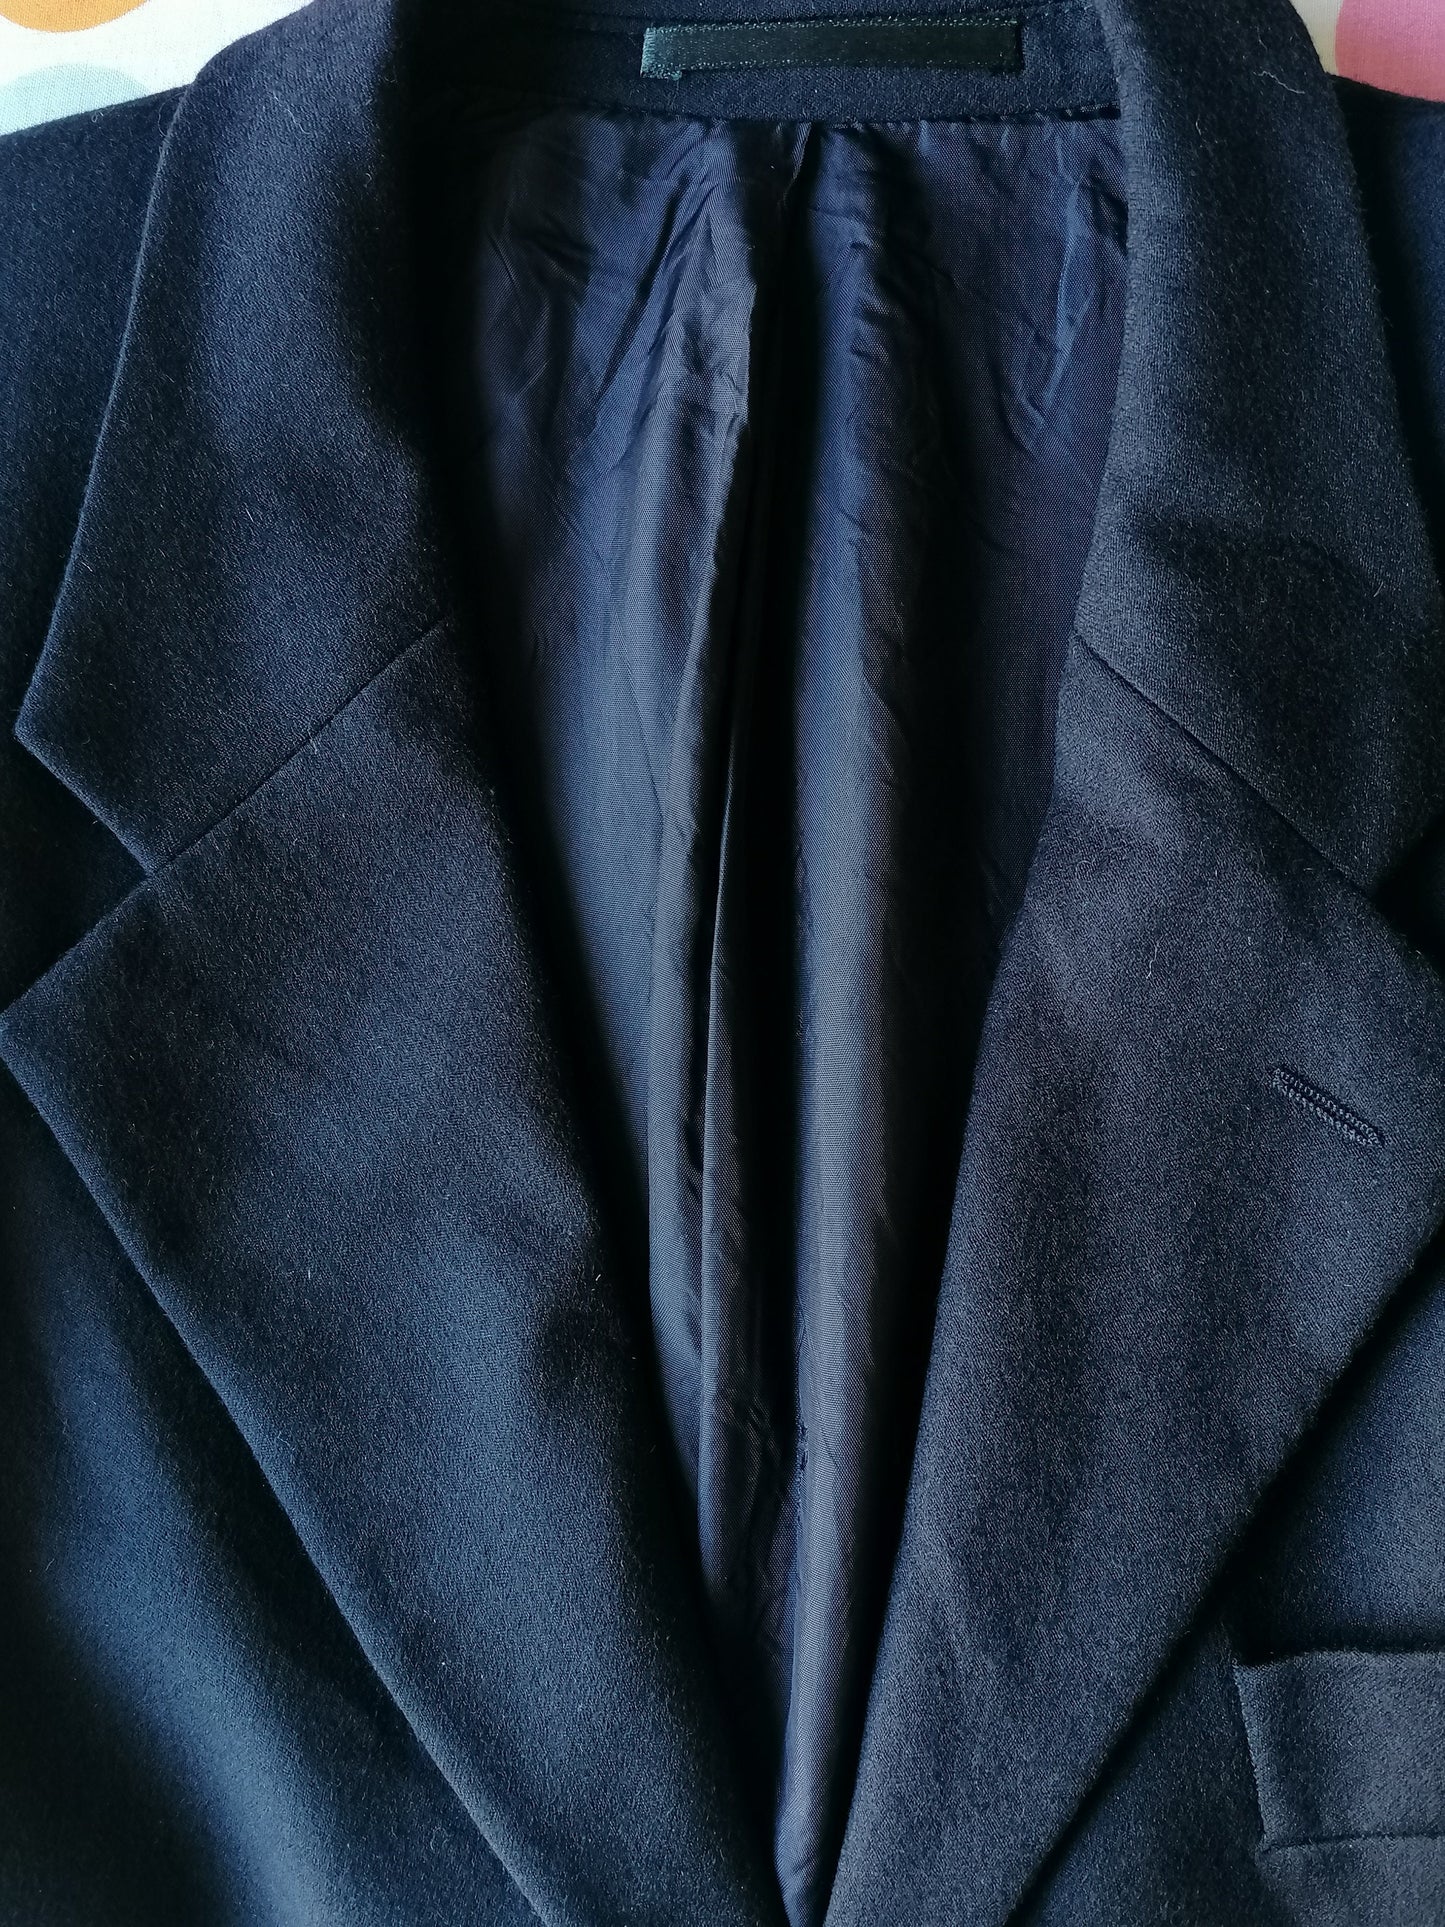 Vintage Londonair woolen jacket. Dark blue colored. Size 50 / M.